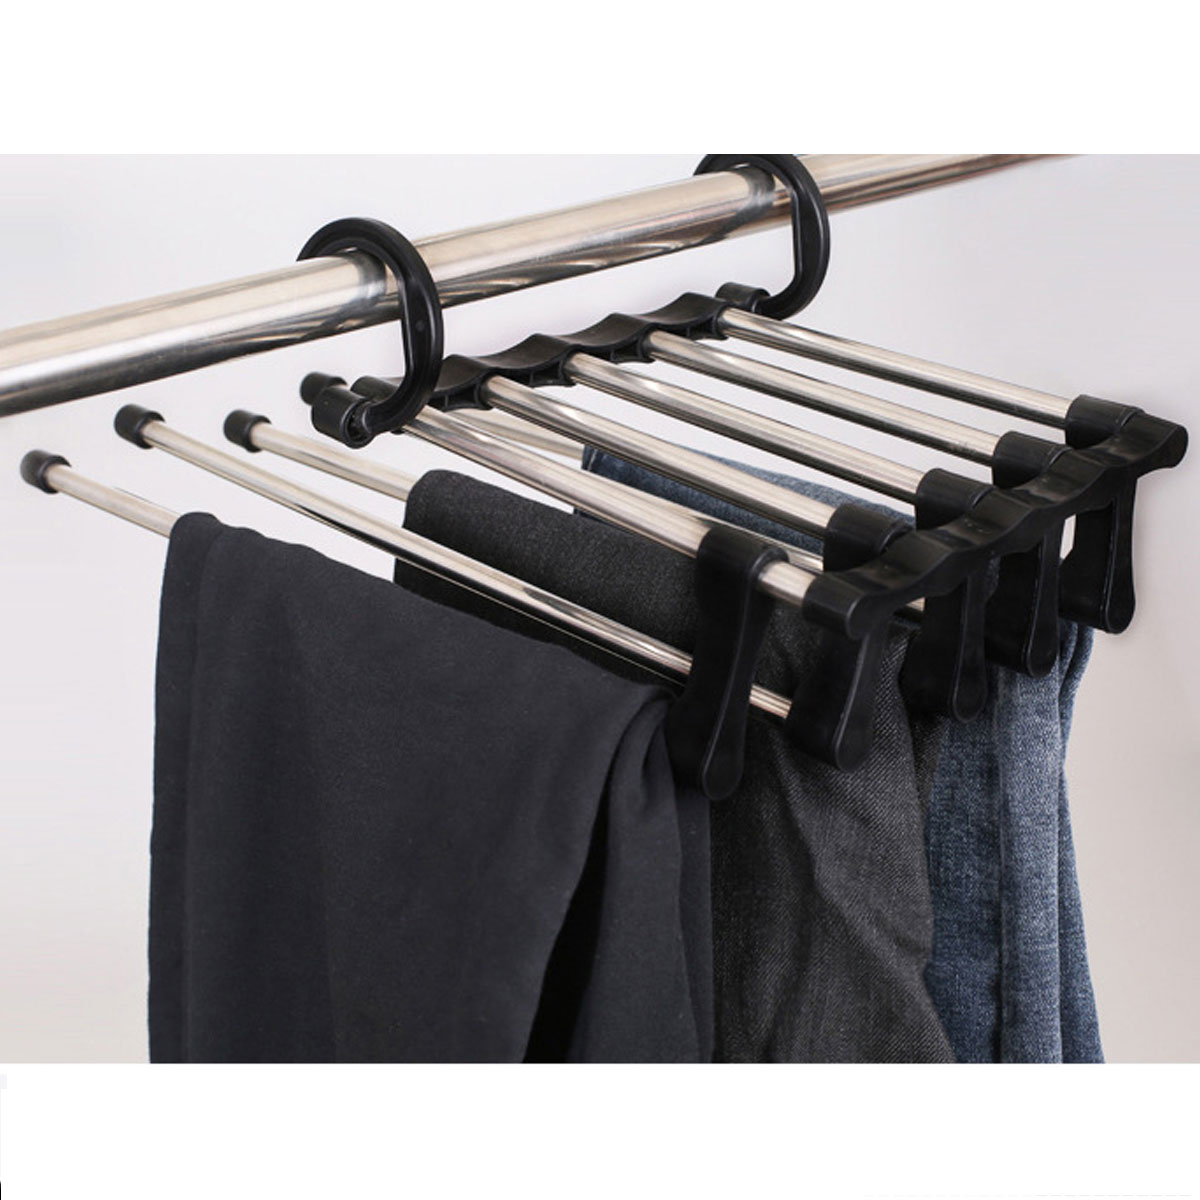 New-5in1-Adjustable-Closet-Organizer-Space-Saver-Trousers-Pants-Rack-Hanger-Hook-1756985